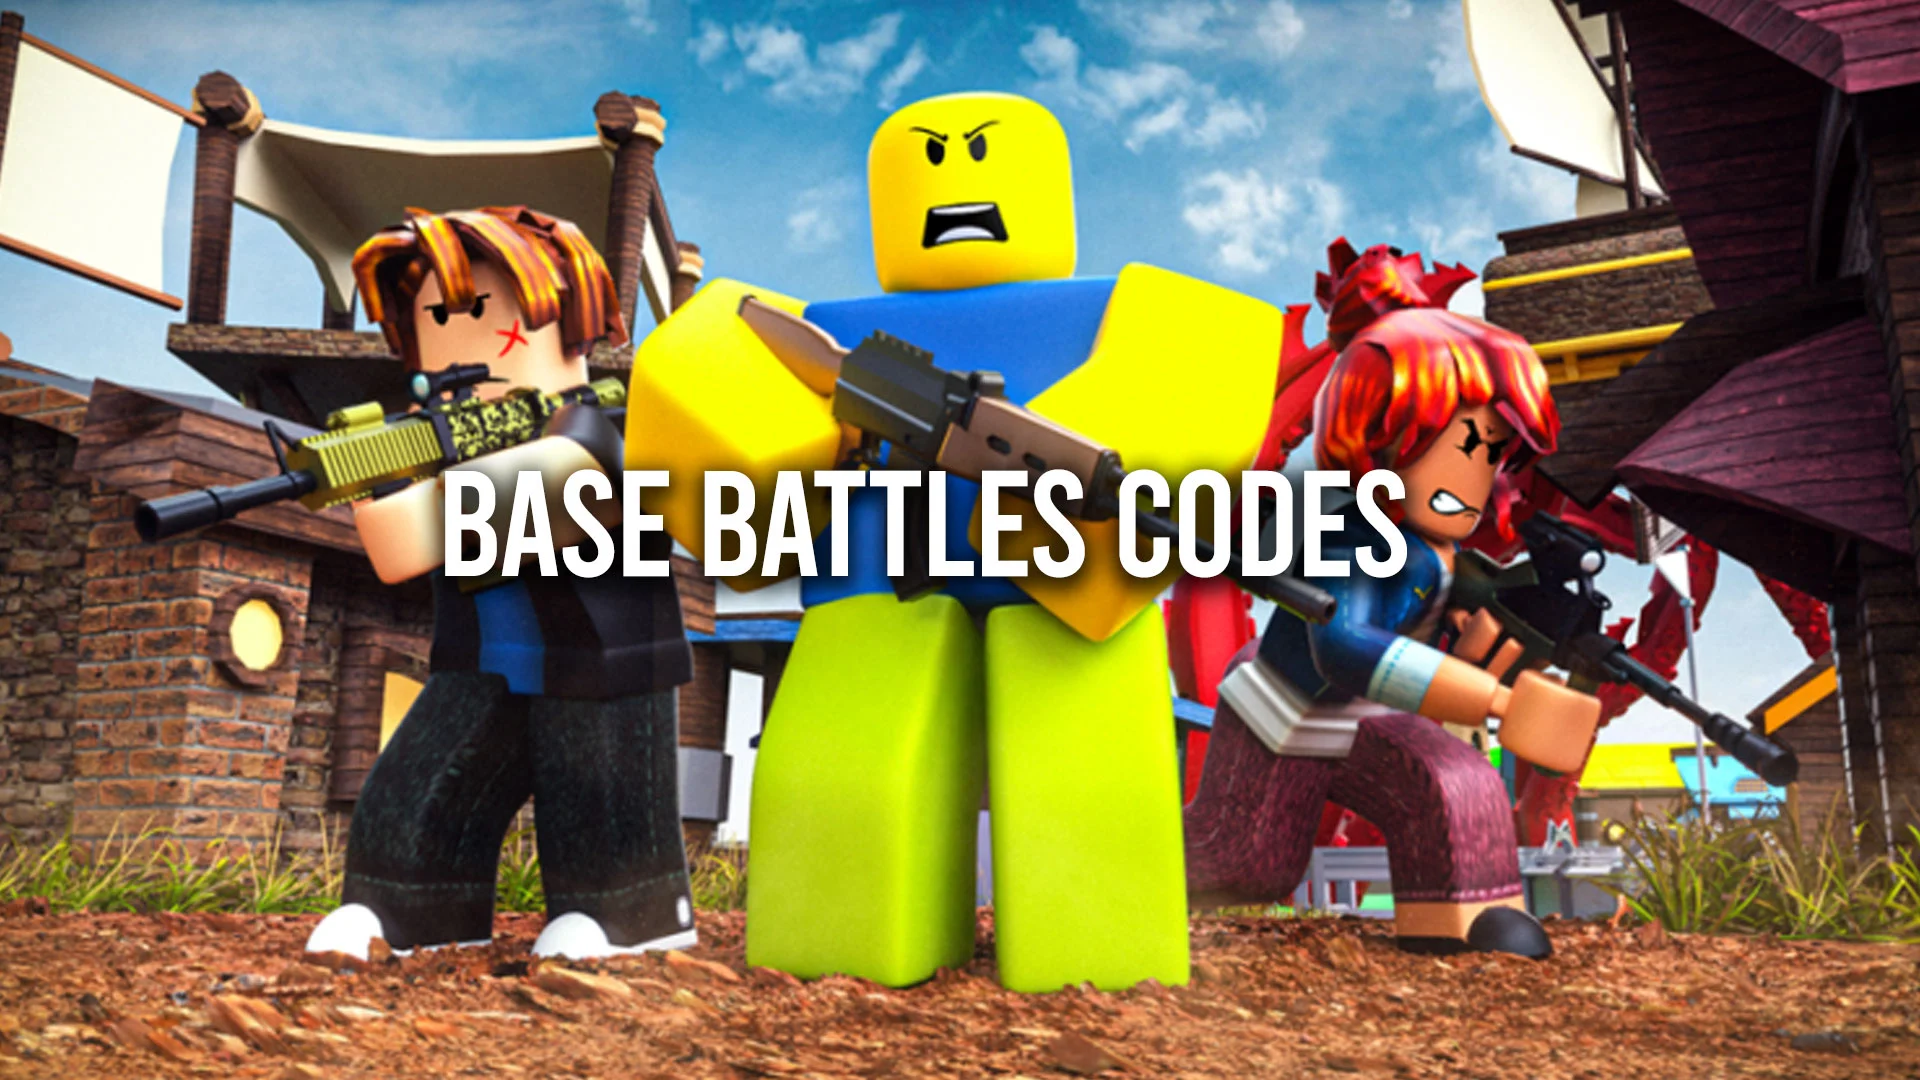 Base Battles Codes